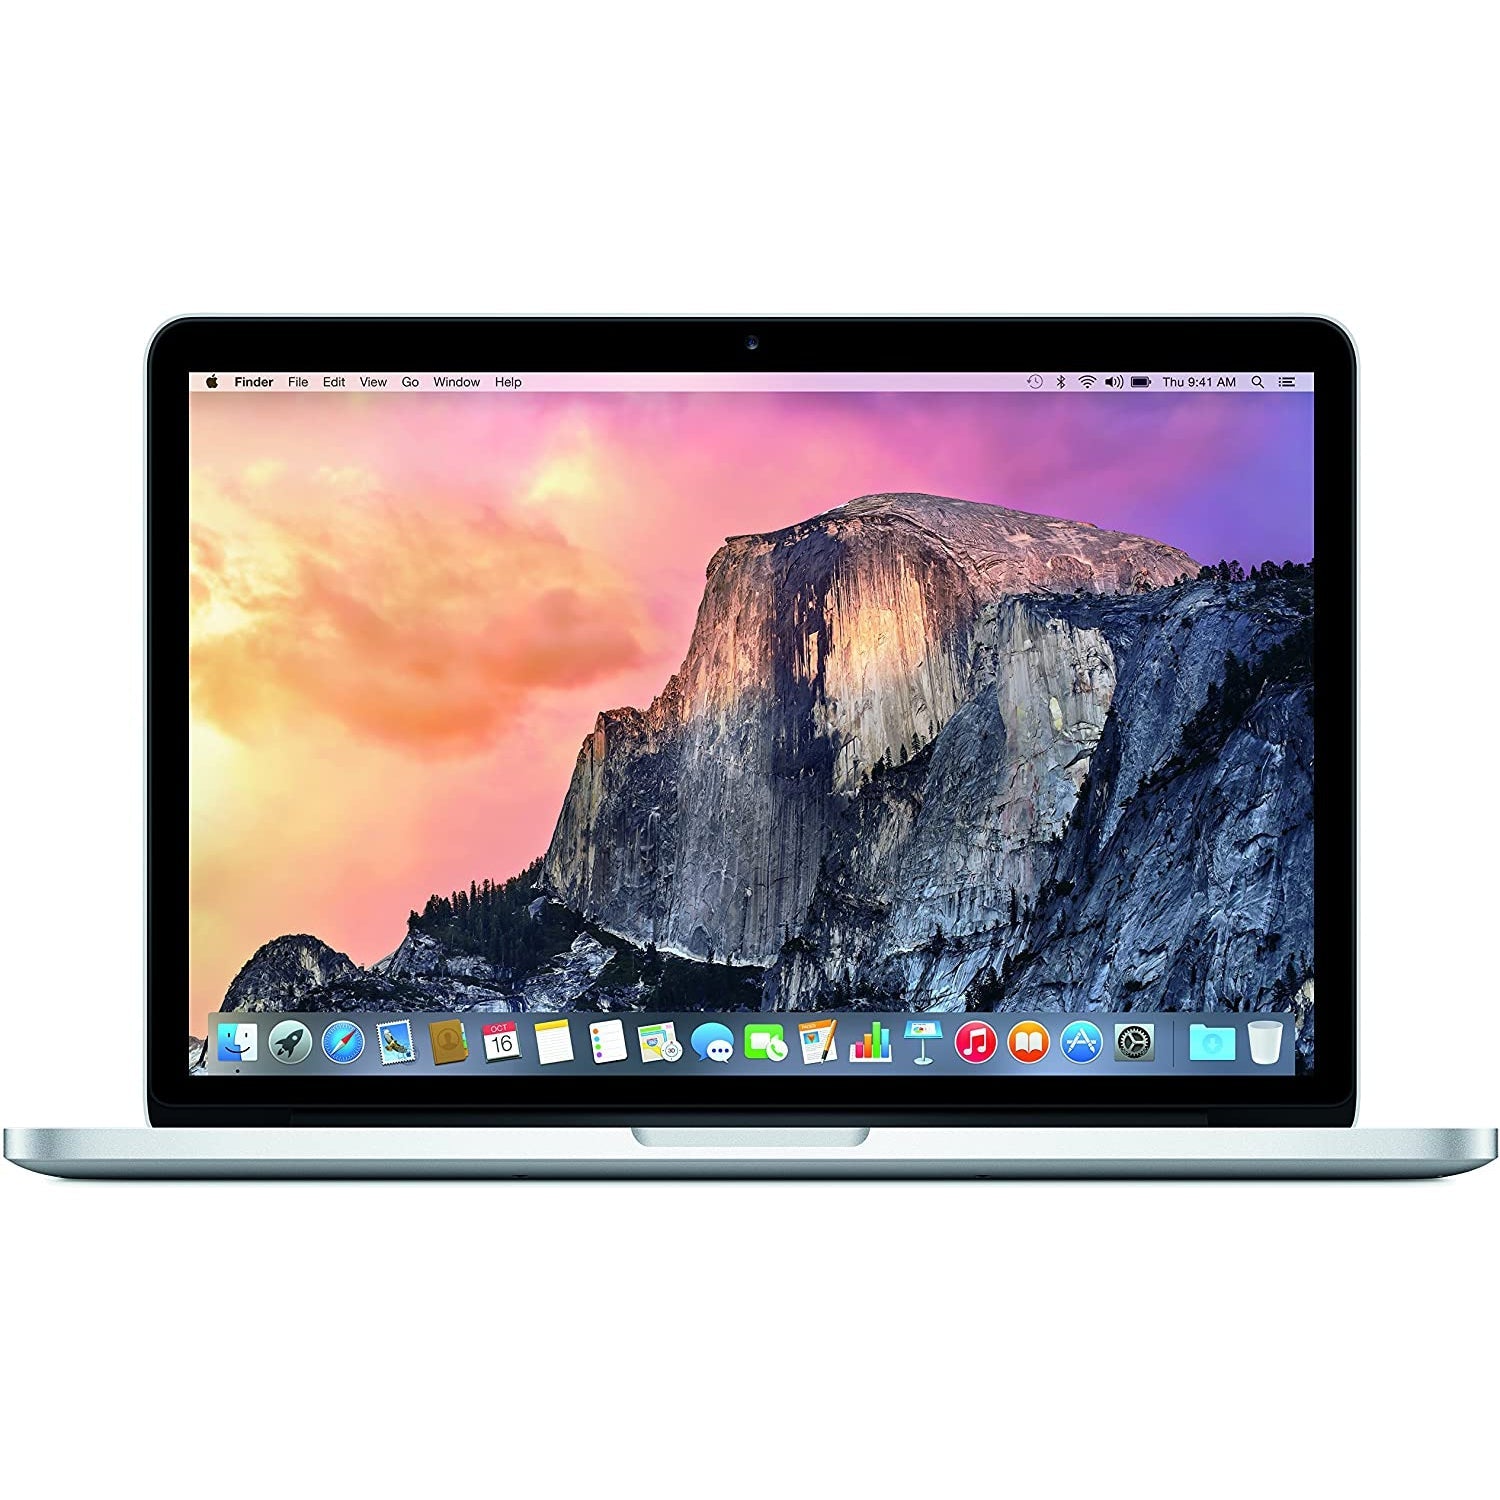 Apple MacBook Pro 13.3'' MF839LL/A (2015) Laptop, Intel Core i5, 8GB RAM, 128GB, Silver - Refurbished Excellent